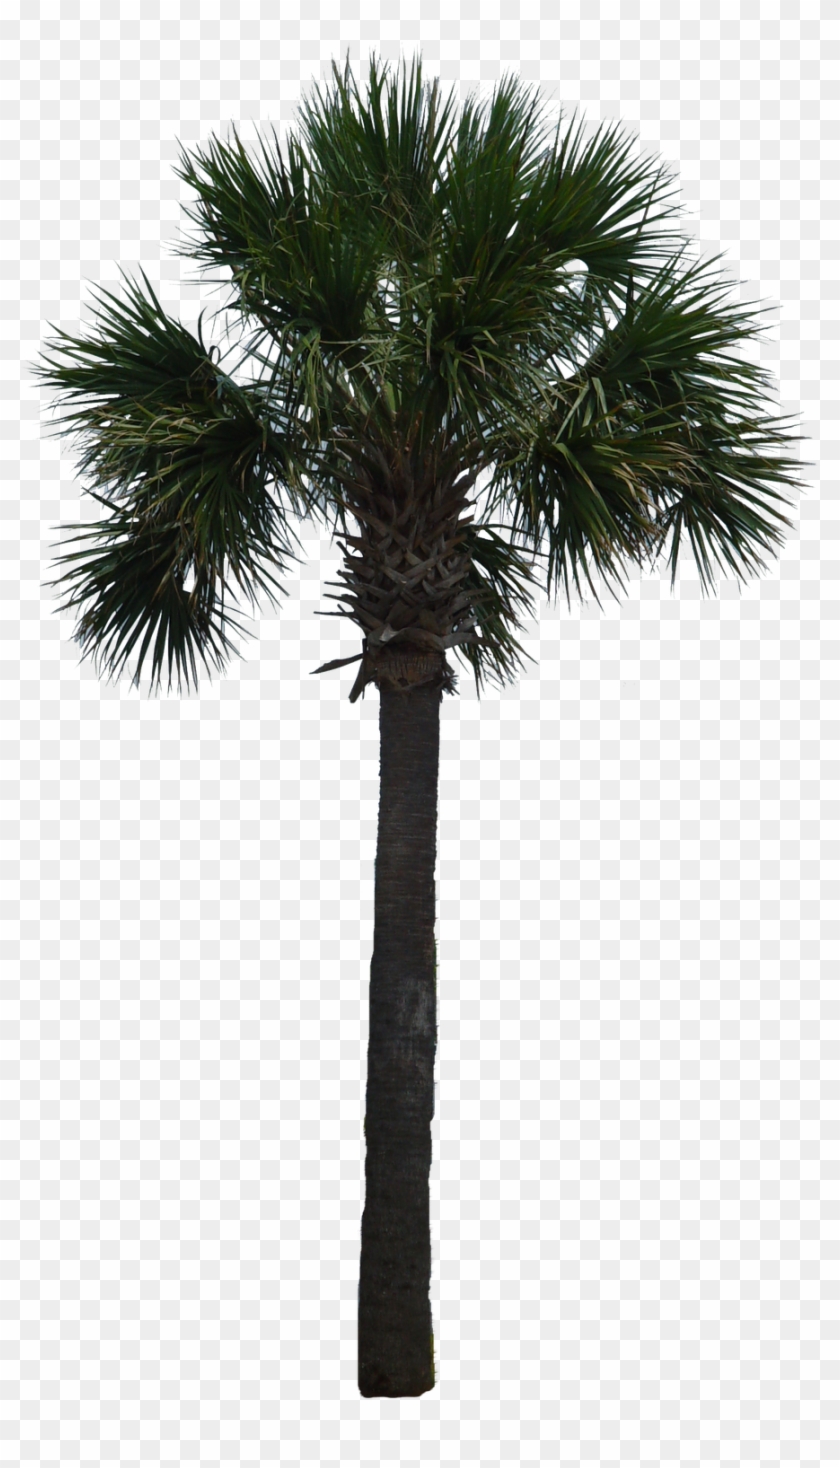 Tree Arecaceae Woody Plant Asian Palmyra Palm - Tree Arecaceae Woody Plant Asian Palmyra Palm #530658